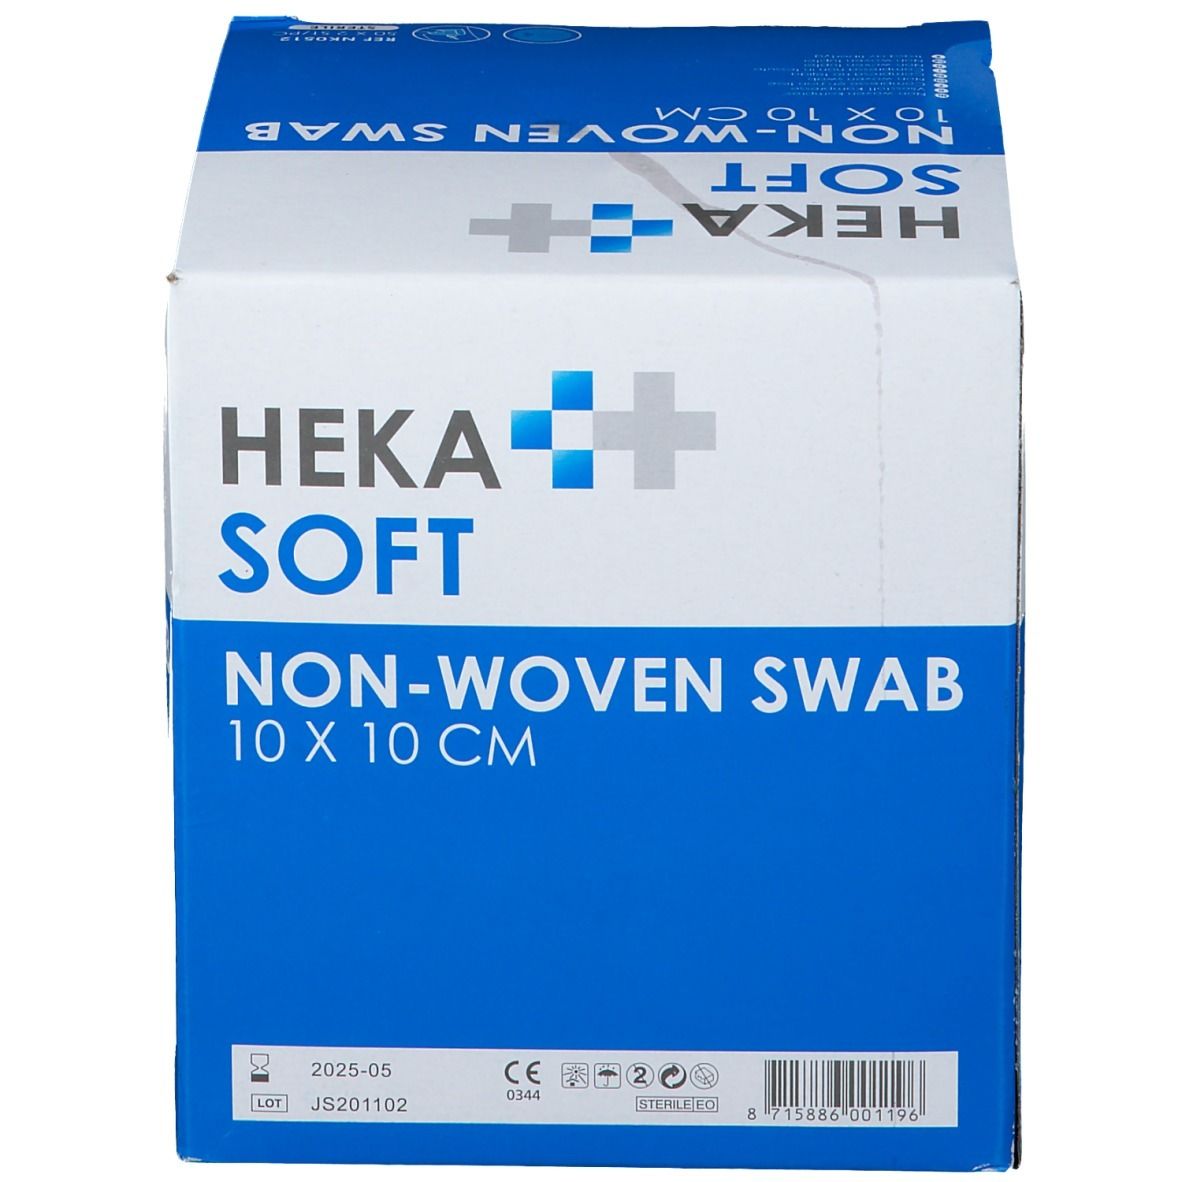 Heka Soft Non-Woven Swab 10 x 10 cm